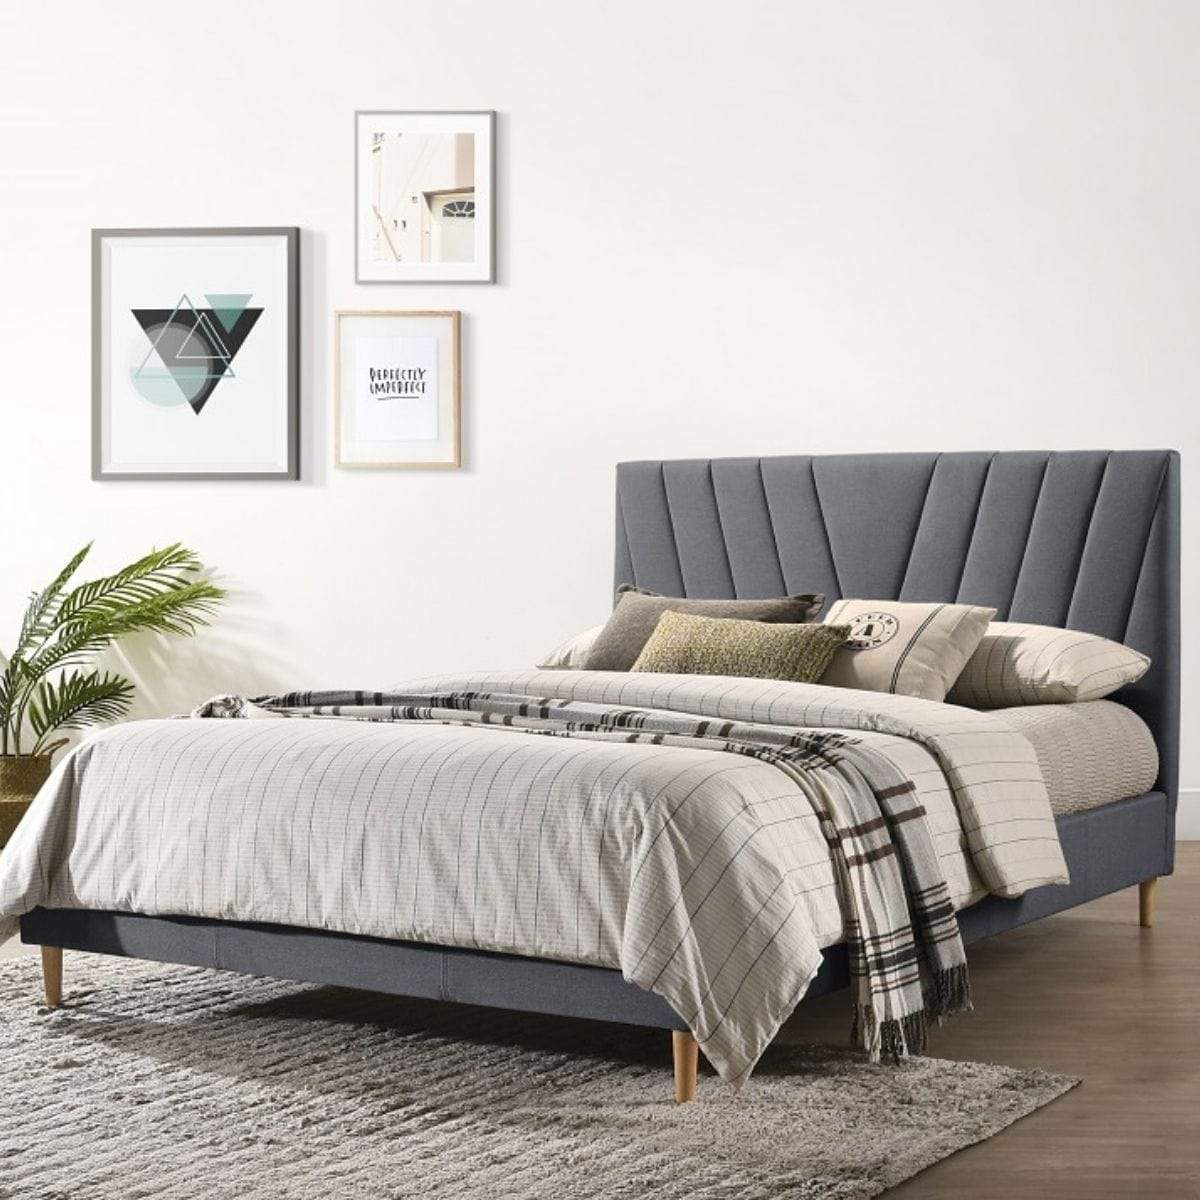 Modern Contemporary Upholstered Fabric Platform Bed Base Frame King Light Grey - Newstart Furniture